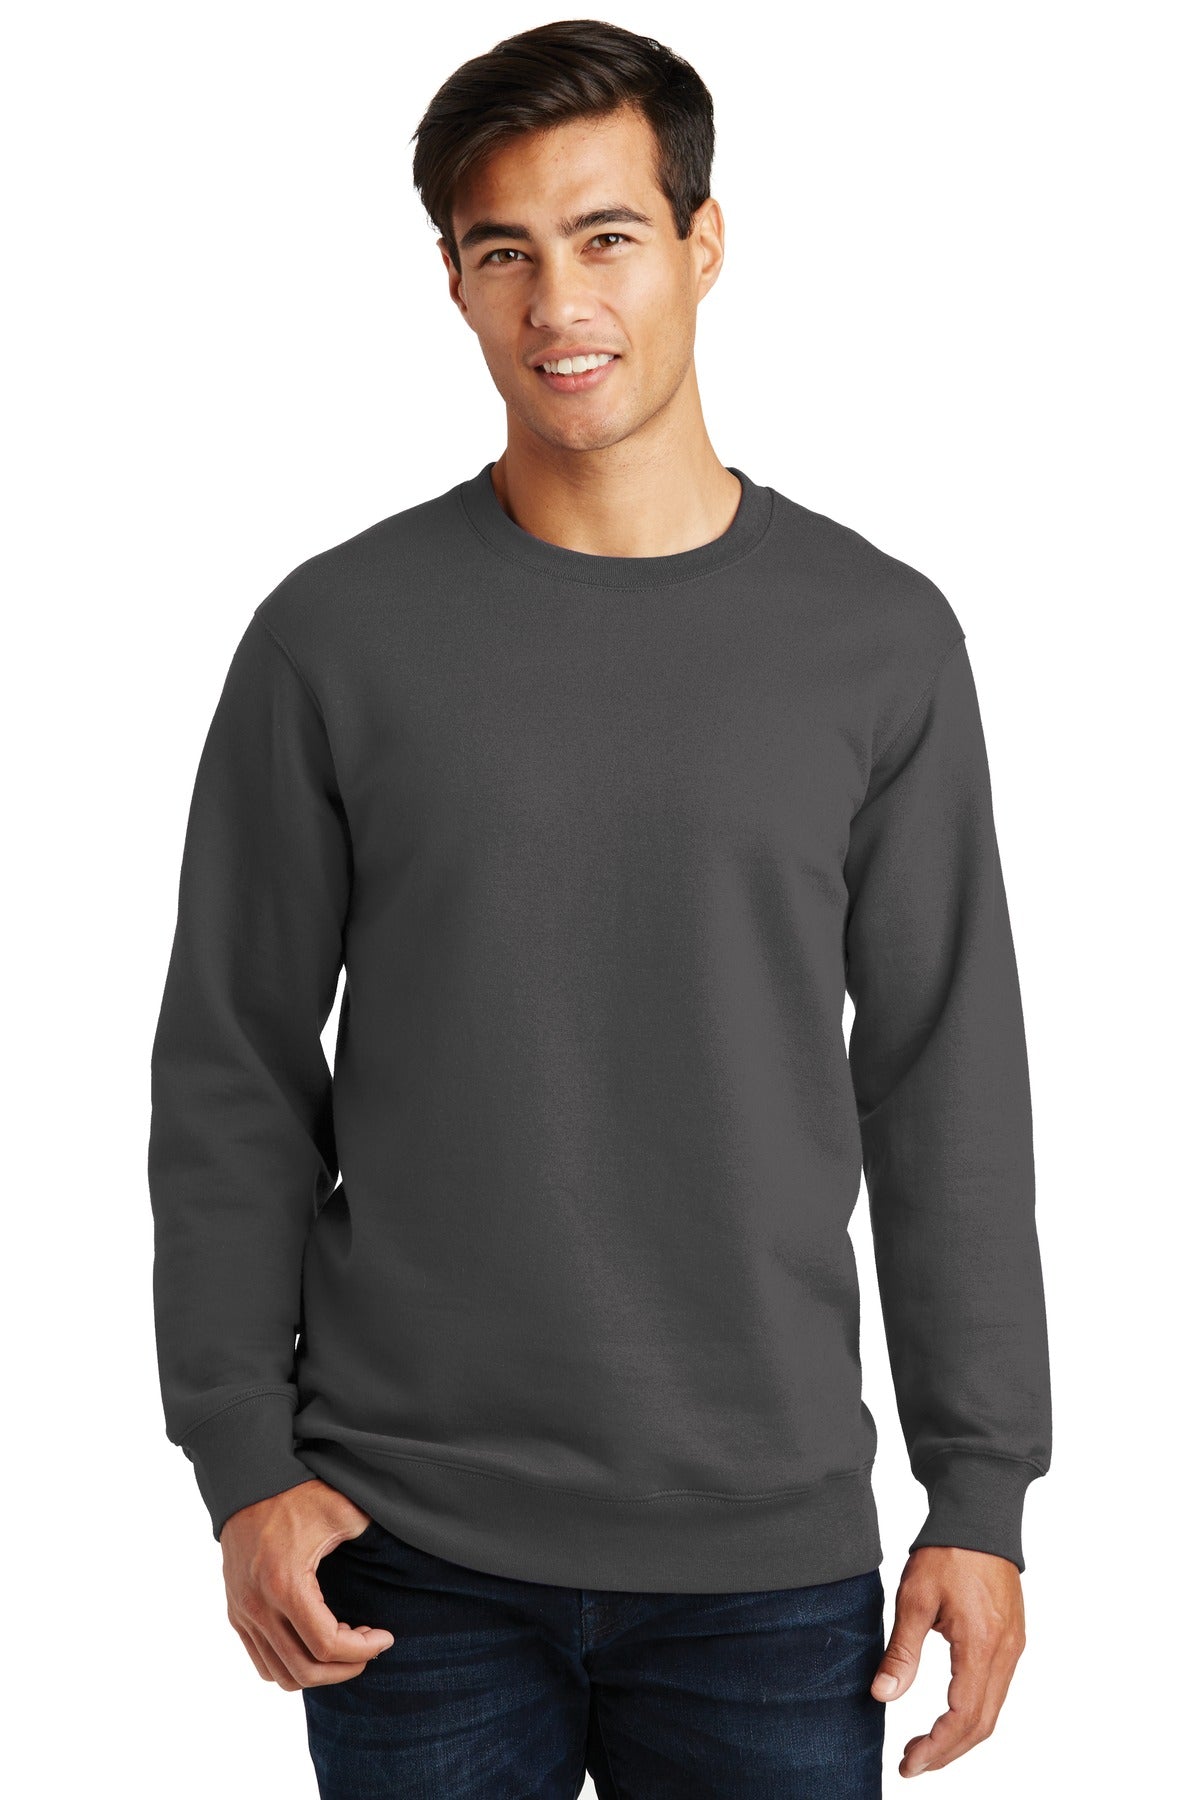 Port & Company® Fan Favorite Fleece Crewneck Sweatshirt. PC850 [Charcoal] - DFW Impression